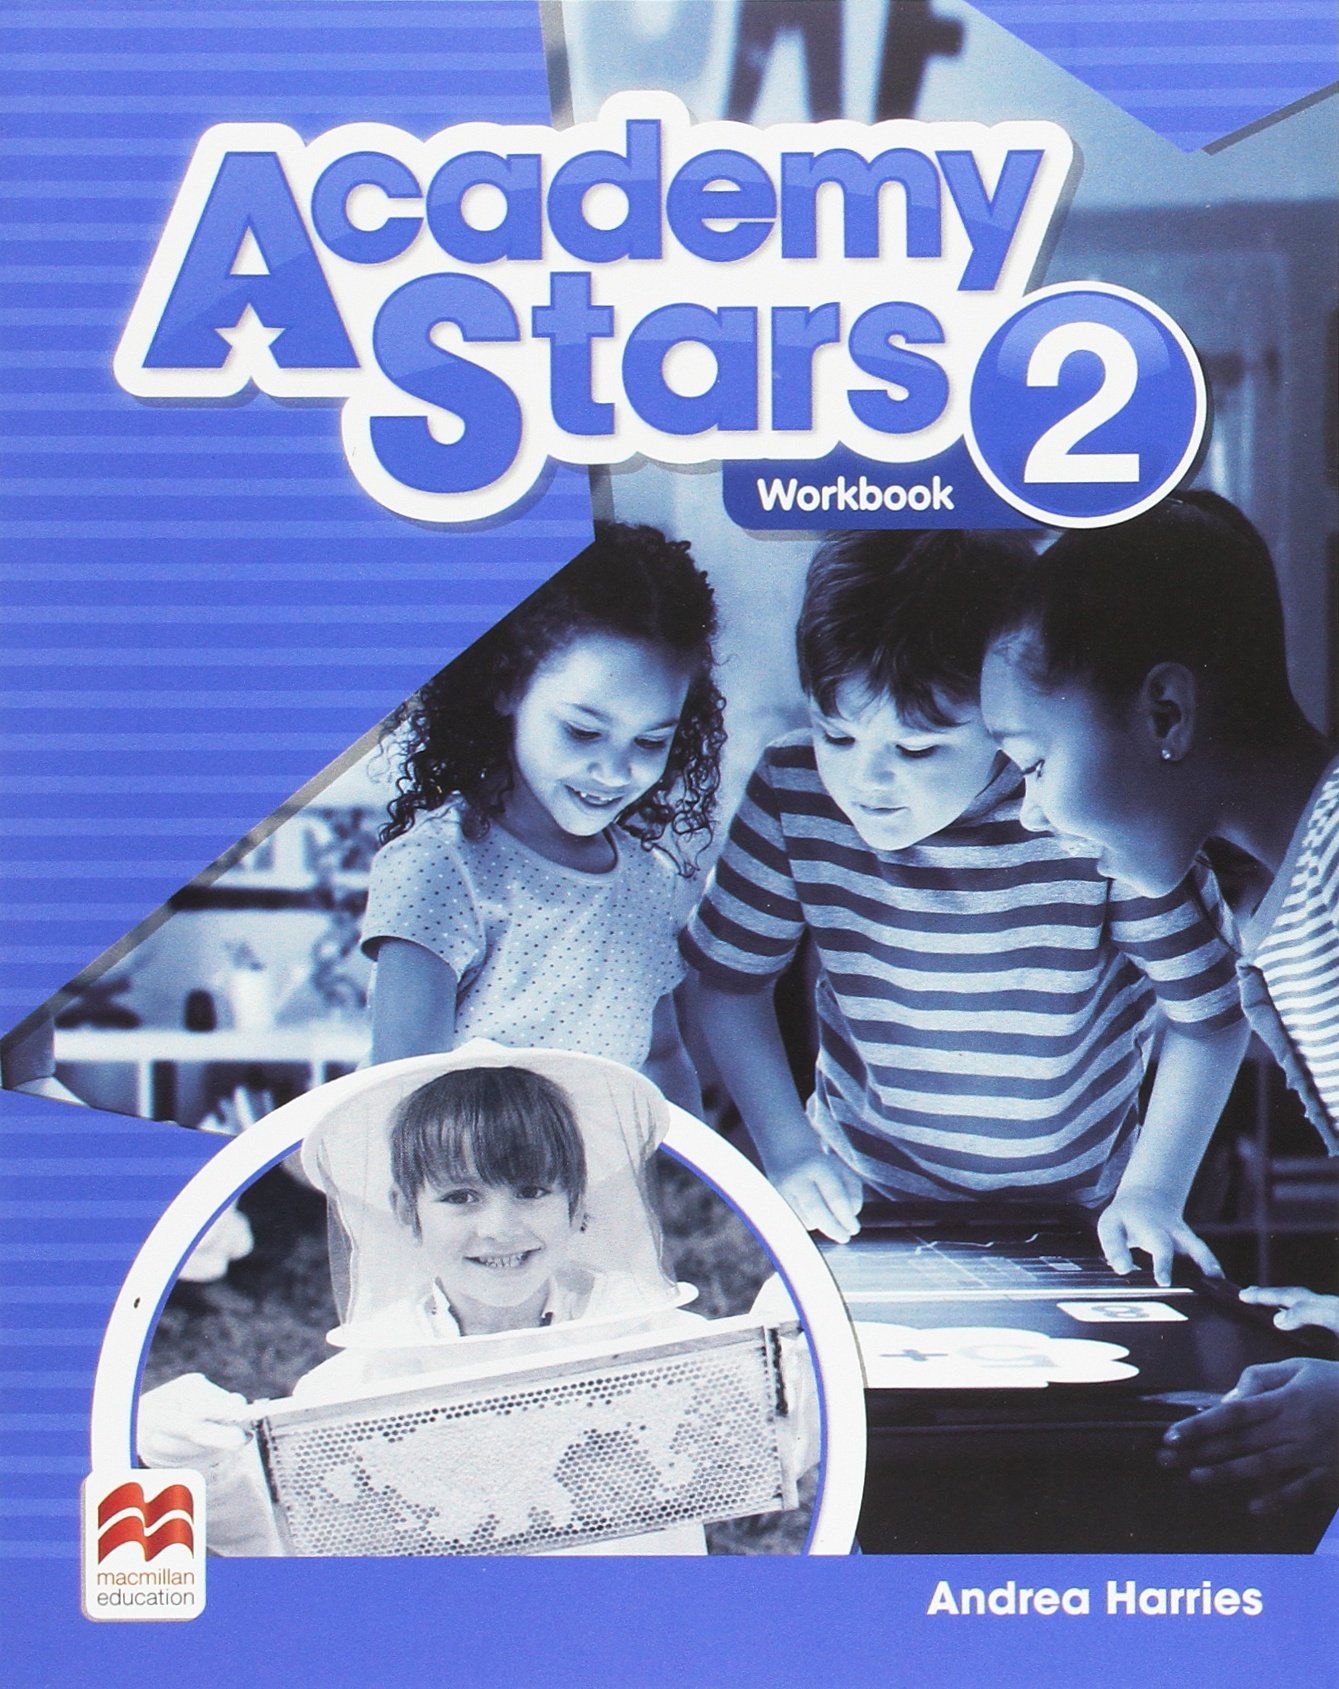 ACADEMY STARS 2 Workbook